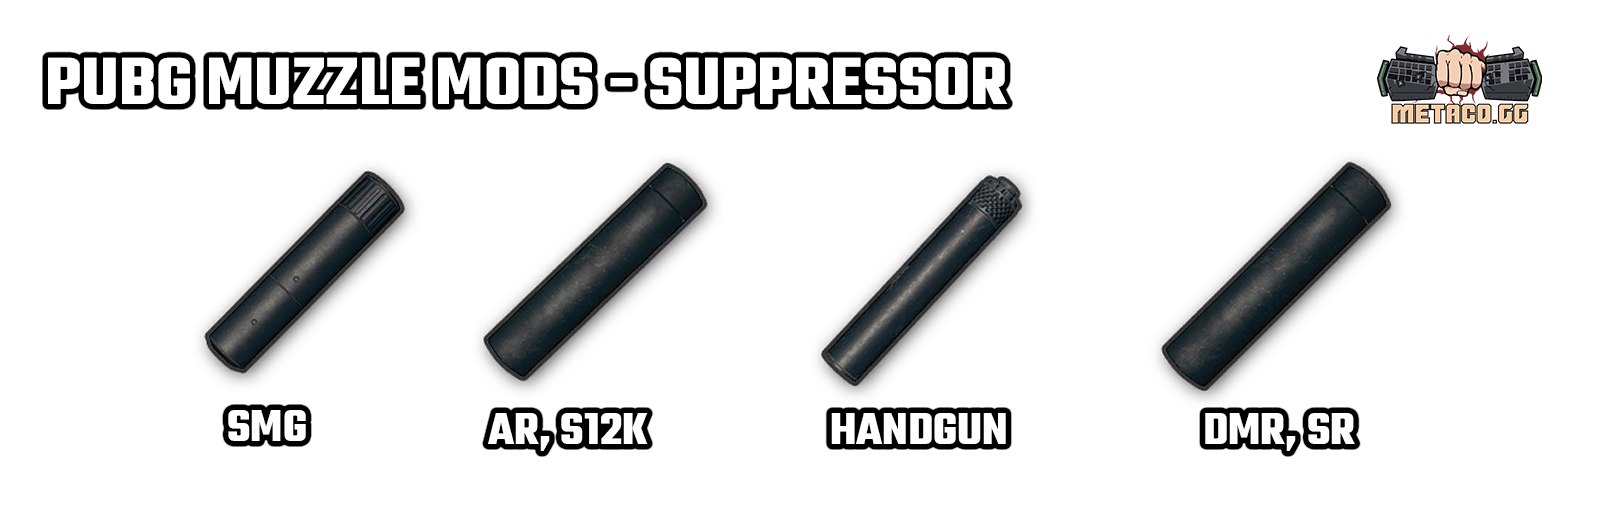 panduan-muzzle-mods-pubg-featured supressor